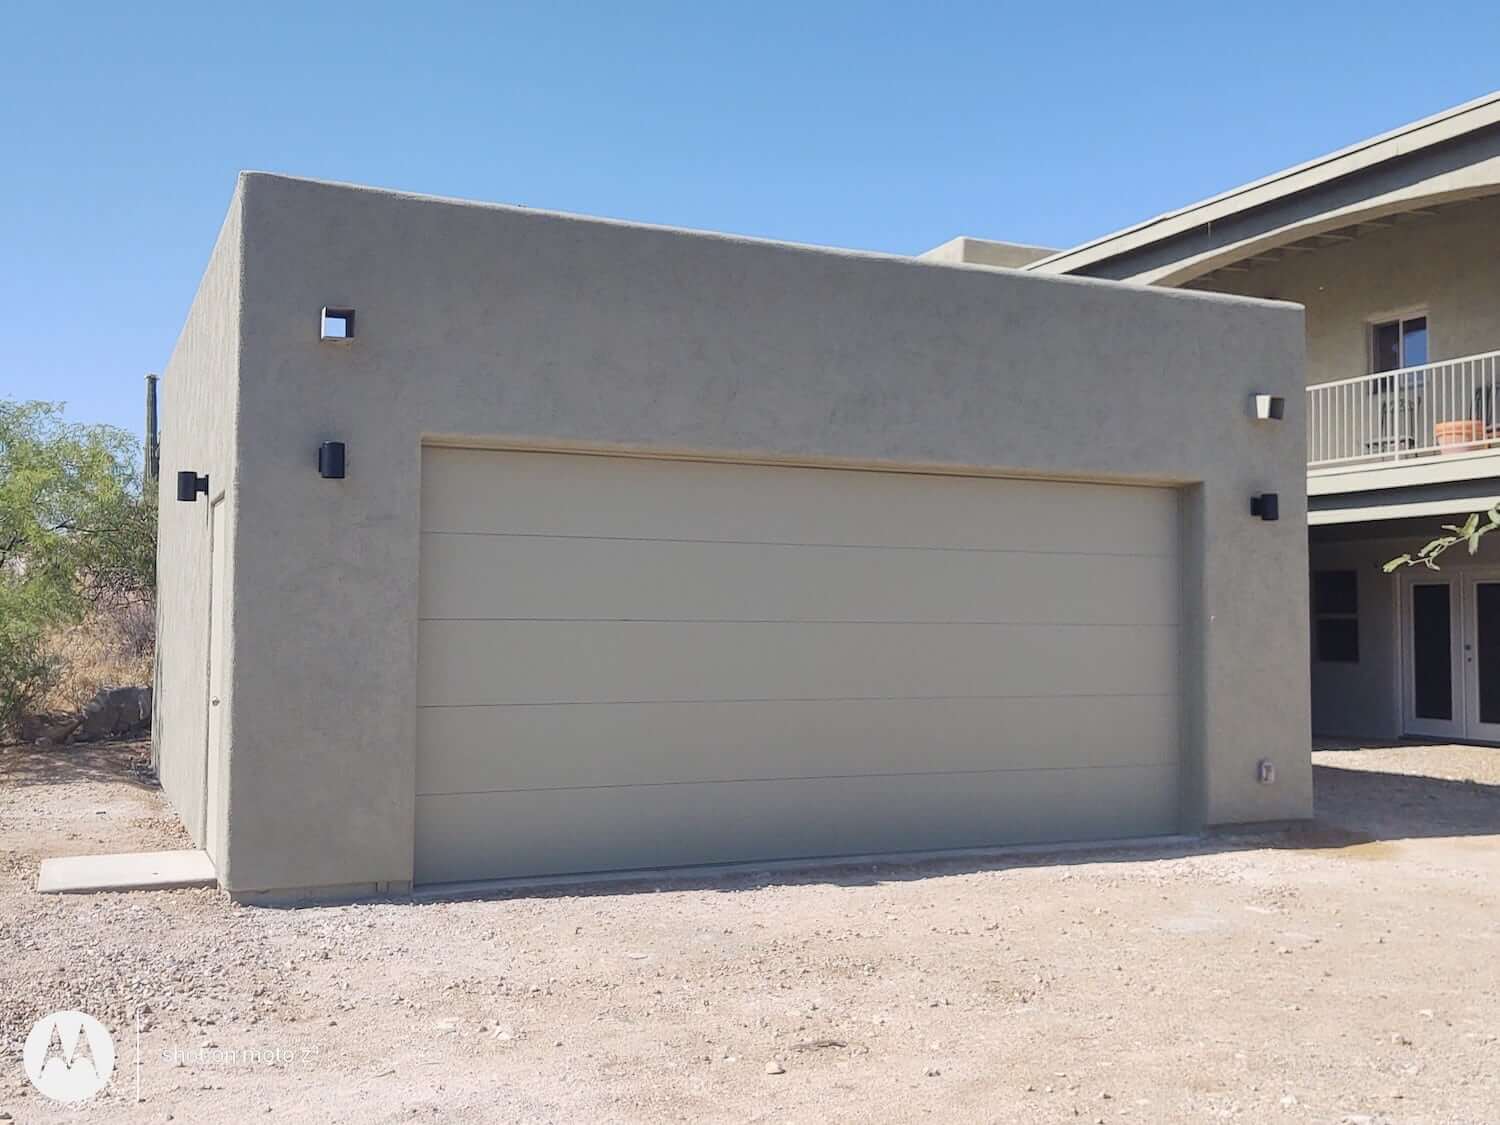 Tucson garage builder projects sample